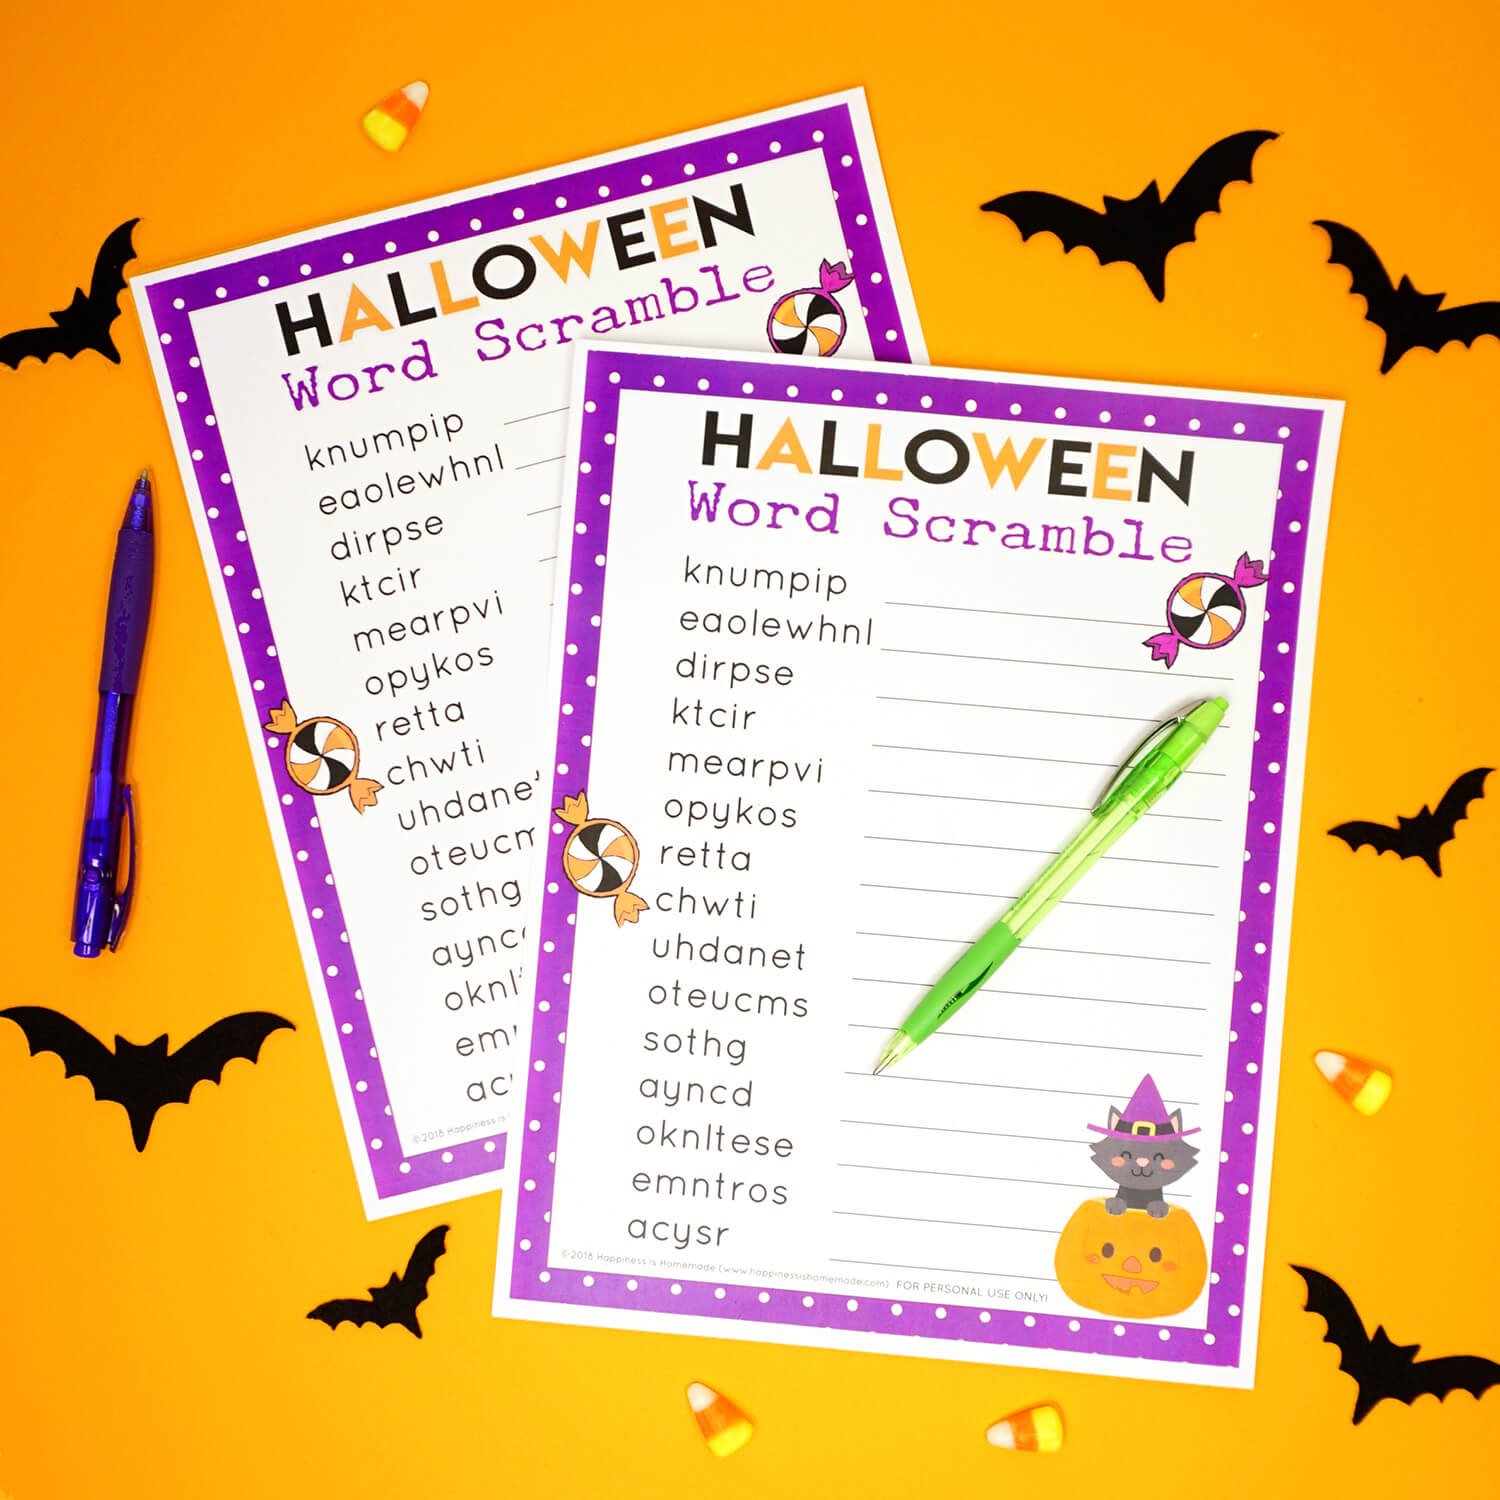 020 Halloween Word Scramble For Kids And Adults Template Regarding Halloween Certificate Template